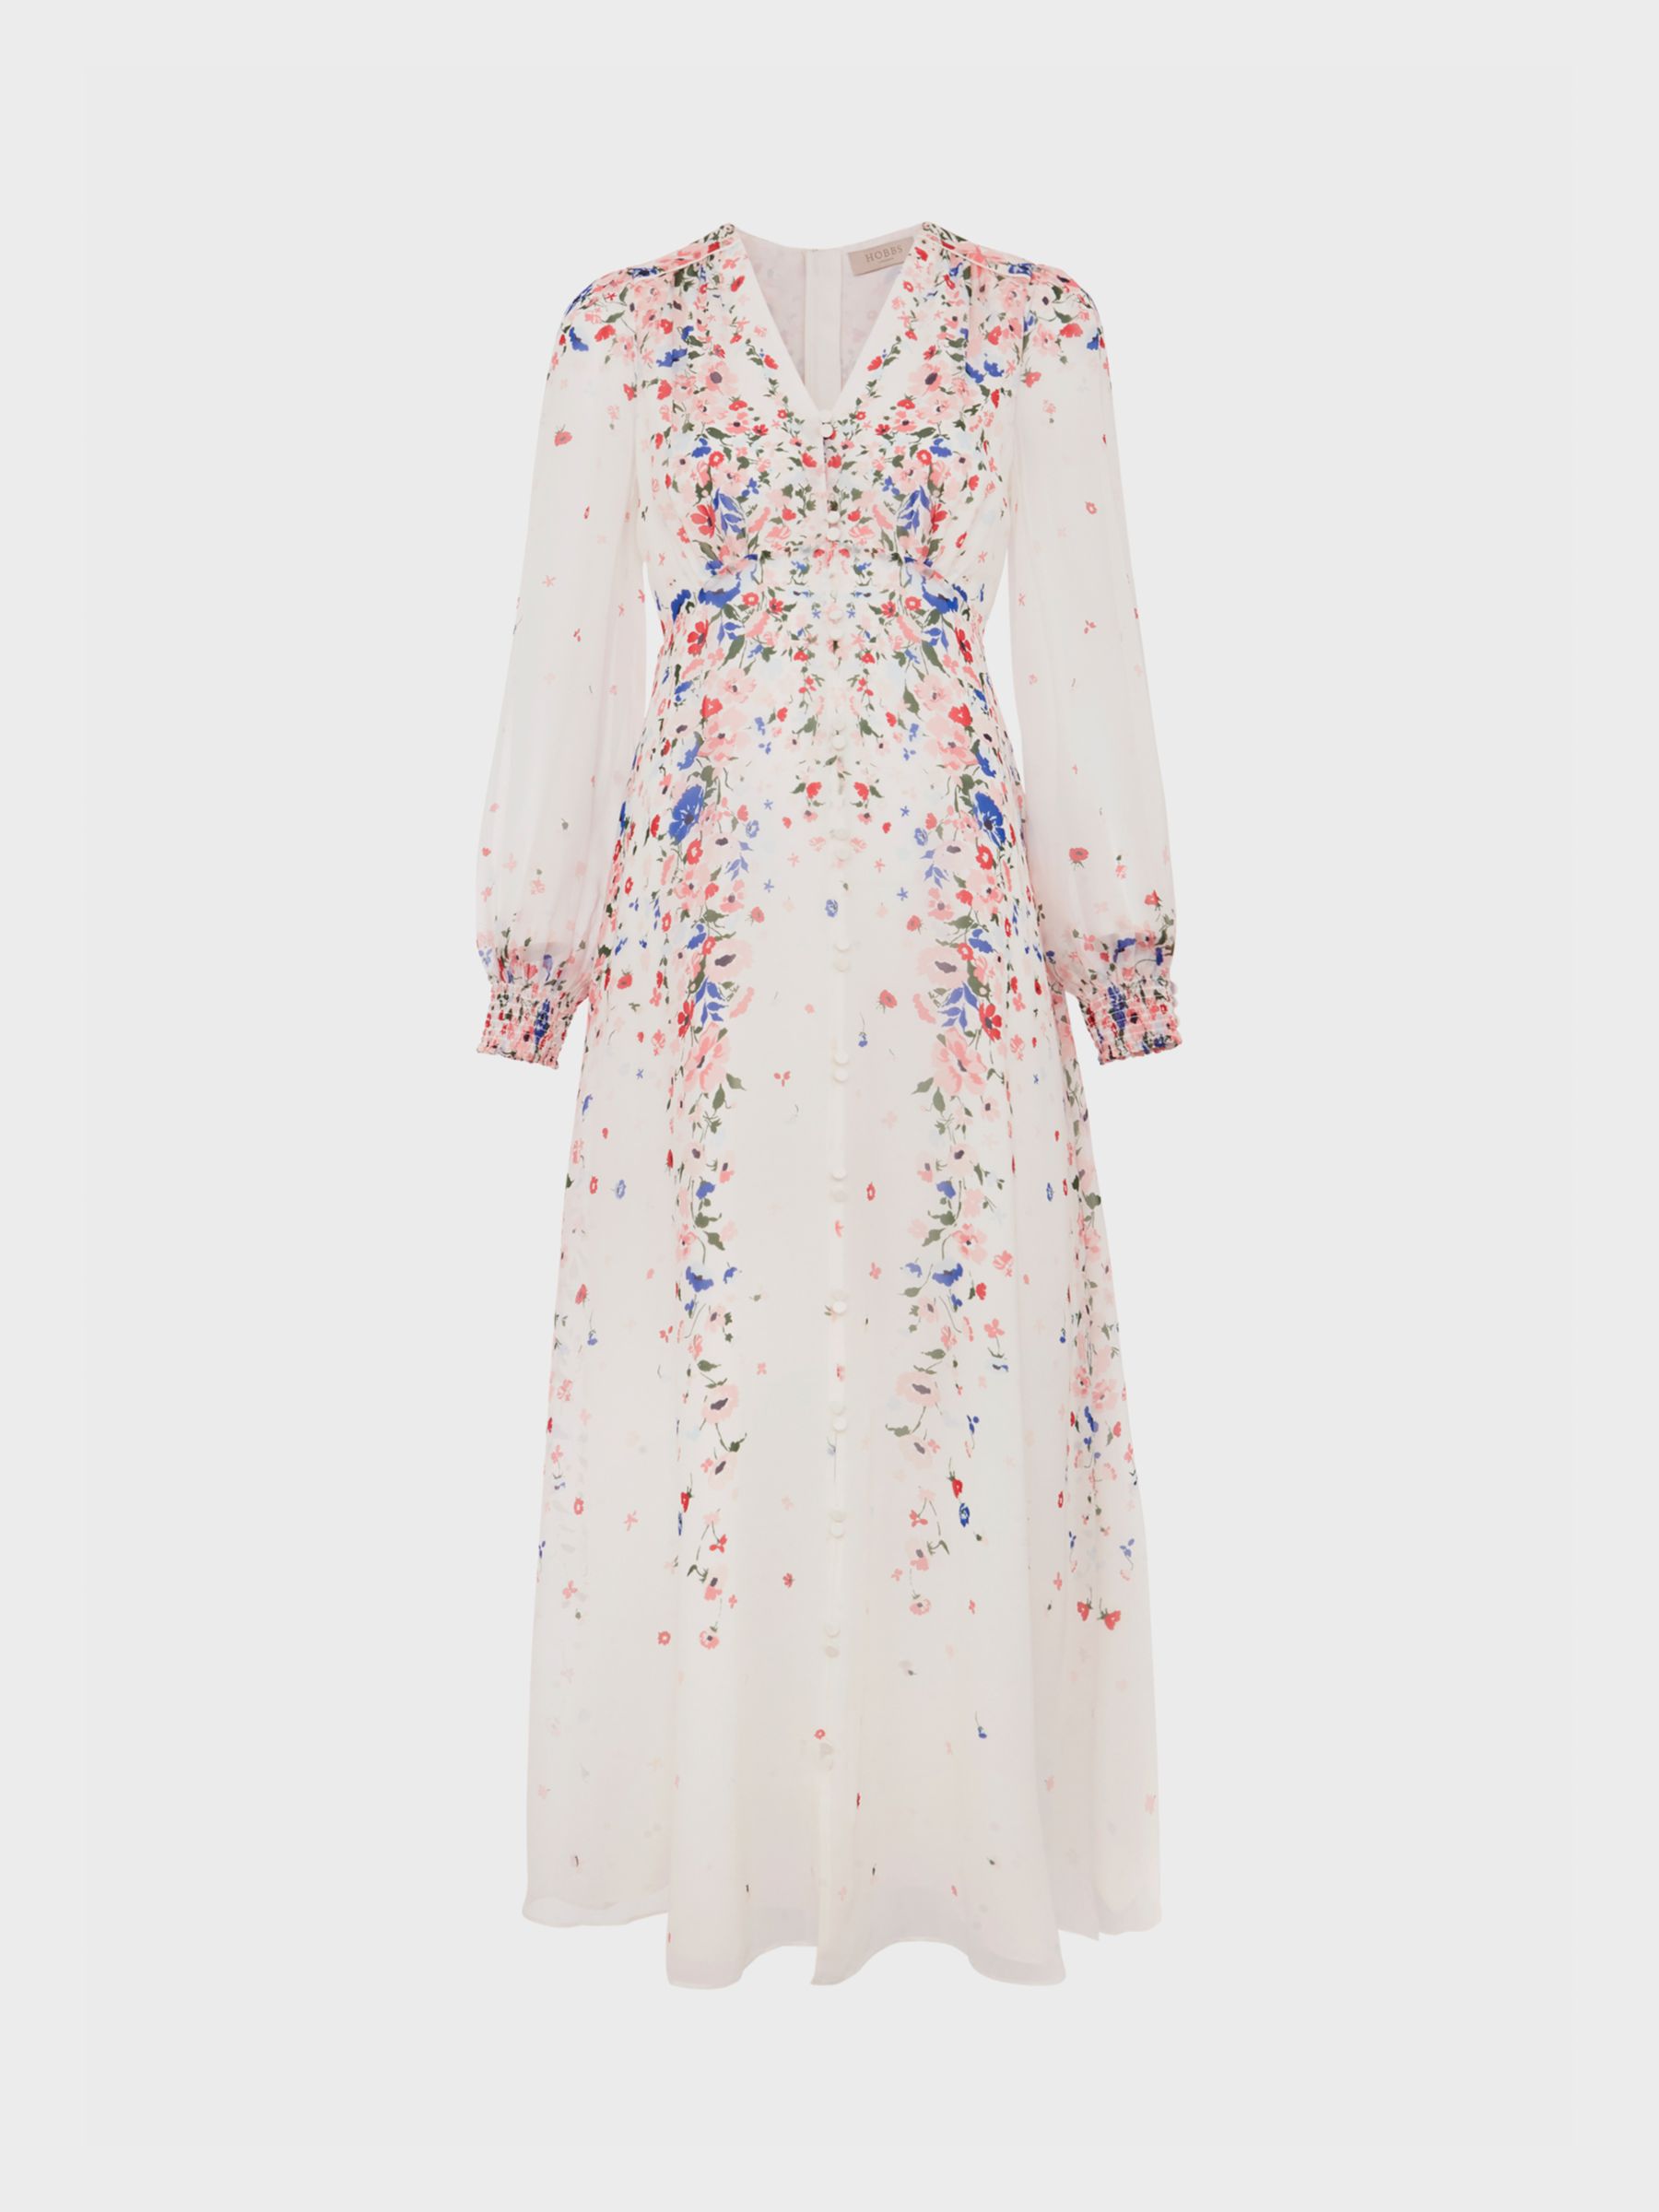 Hobbs Asher Floral Silk Maxi Dress, Ivory/Multi, 10